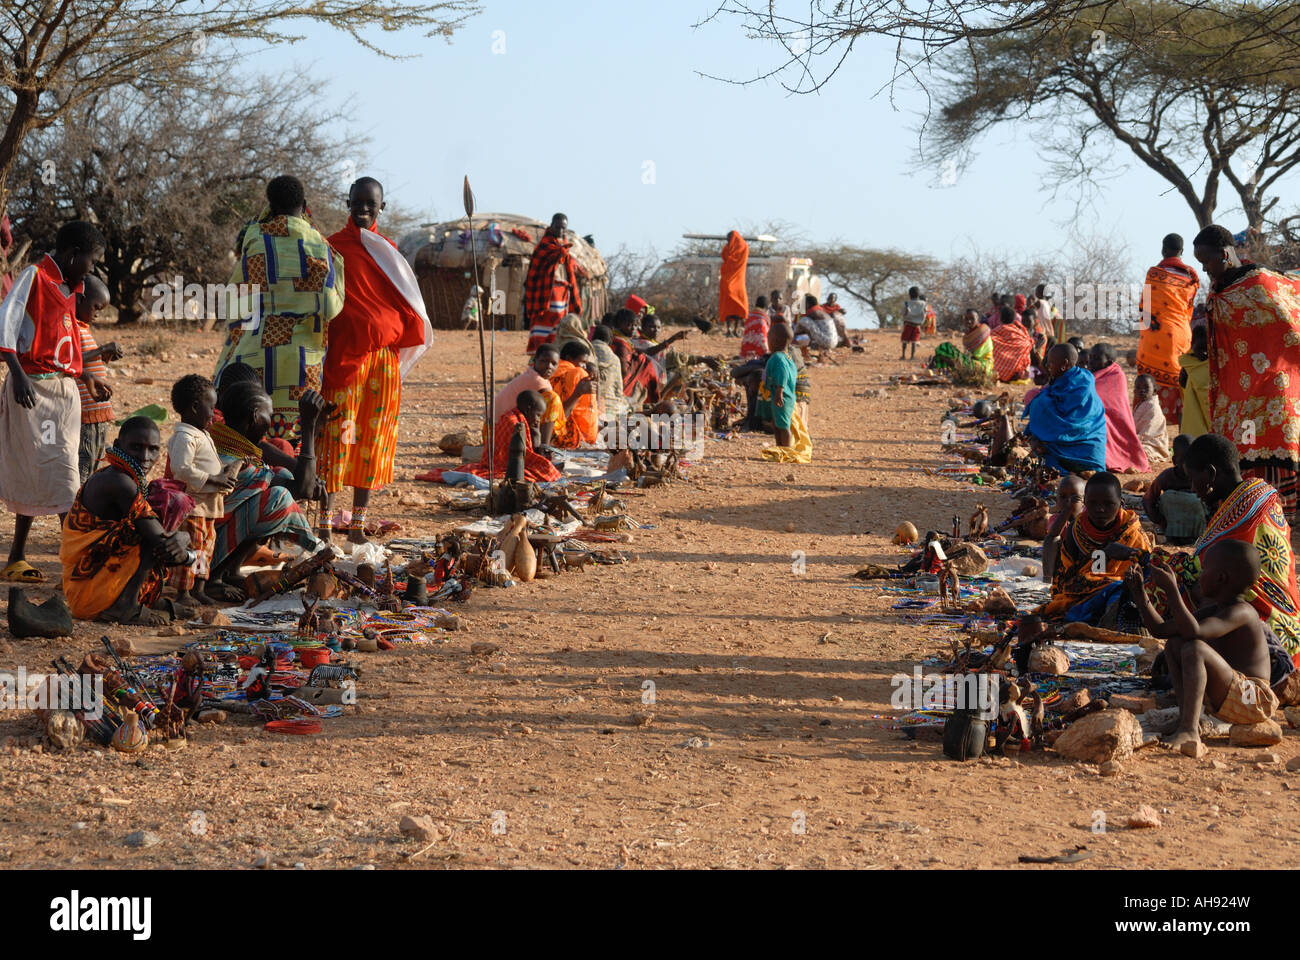 A traditional Samburu village market with goods arranged for sale to visitors near Samburu National Reserve Kenya East Africa Stock Photo